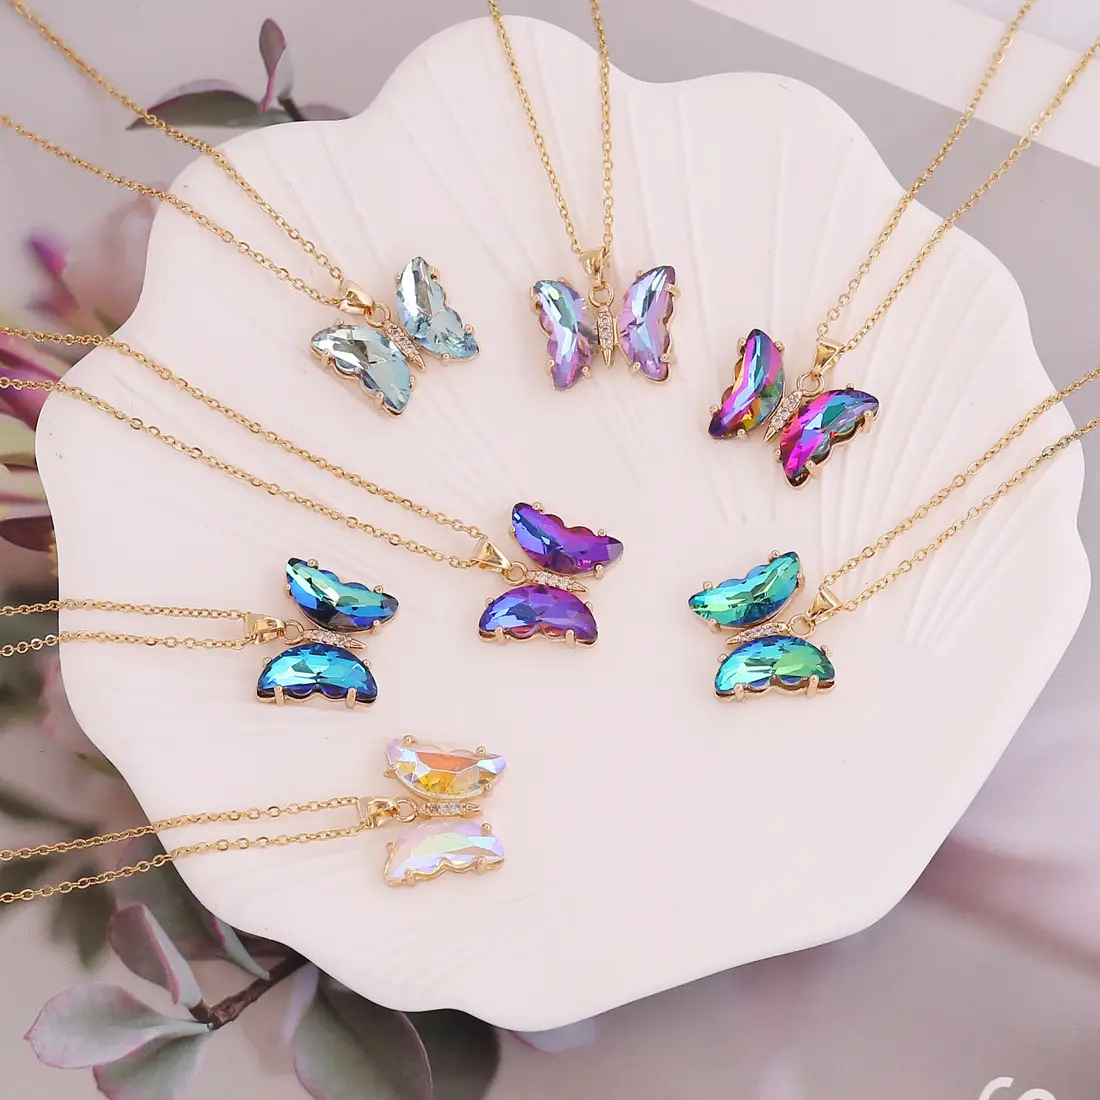 2022 Hot Sale Fashion Clavicle Chain Necklace Gradient Butterfly Pendant Necklace Women